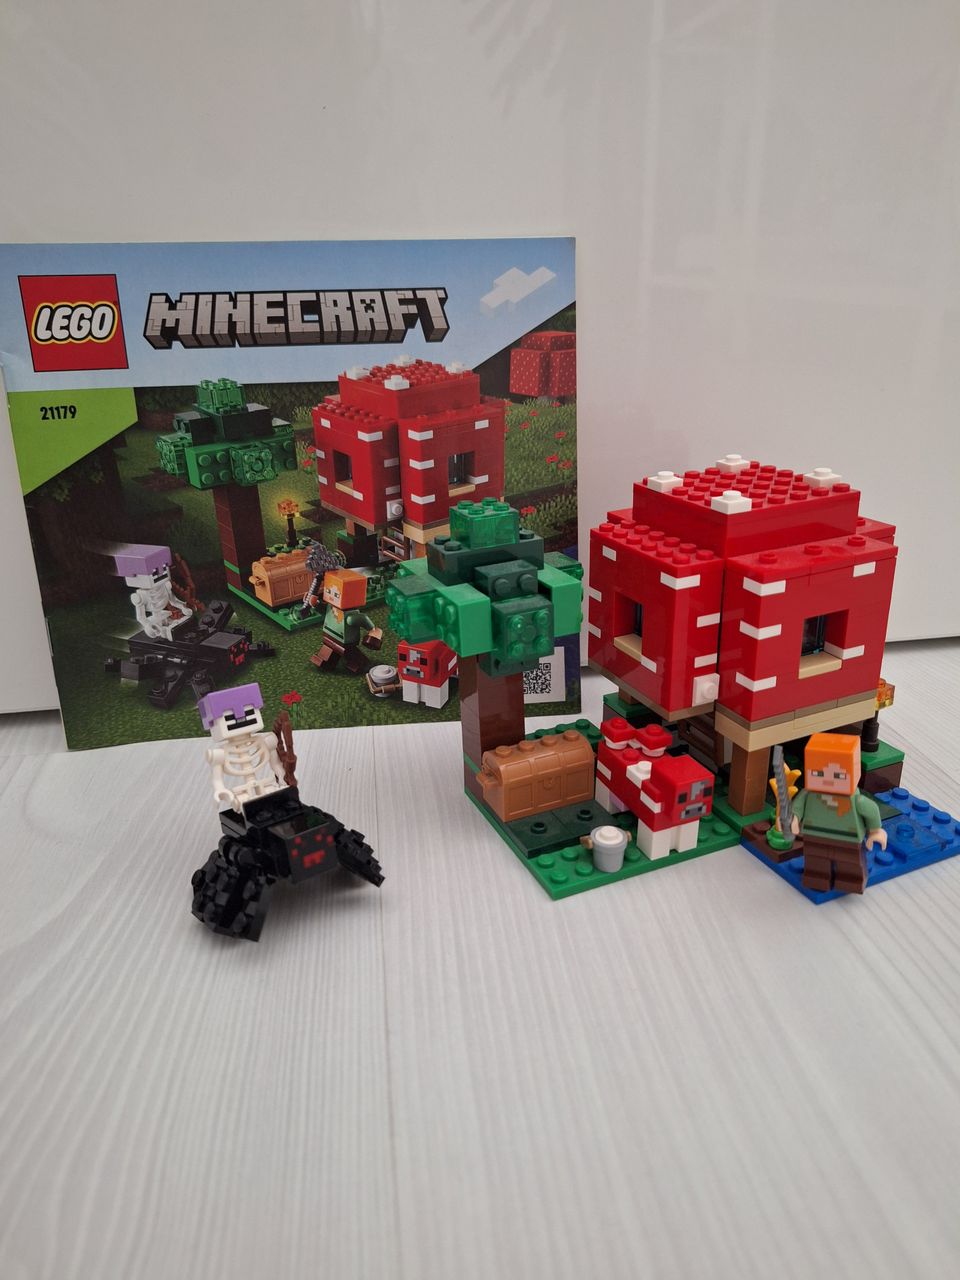 Sienitalo 21179 Minecraft LEGO